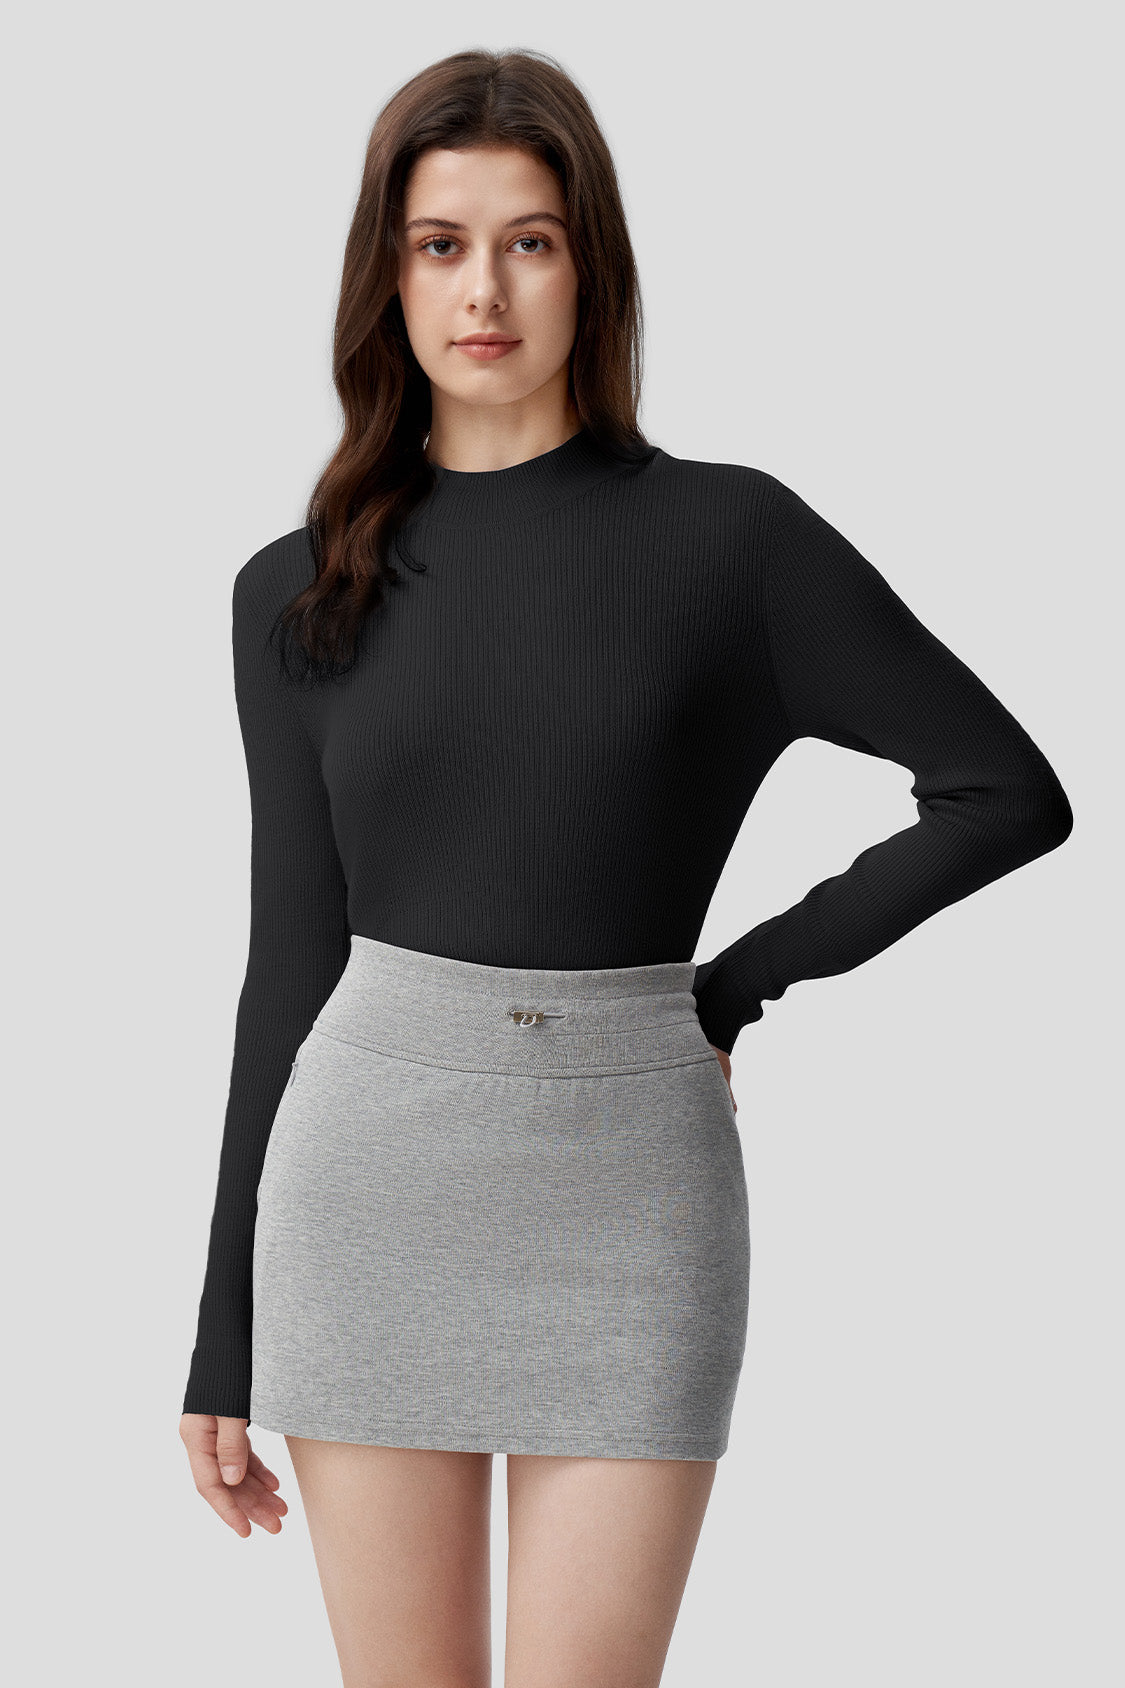 beneunder women's wool baselayer sweater #color_black